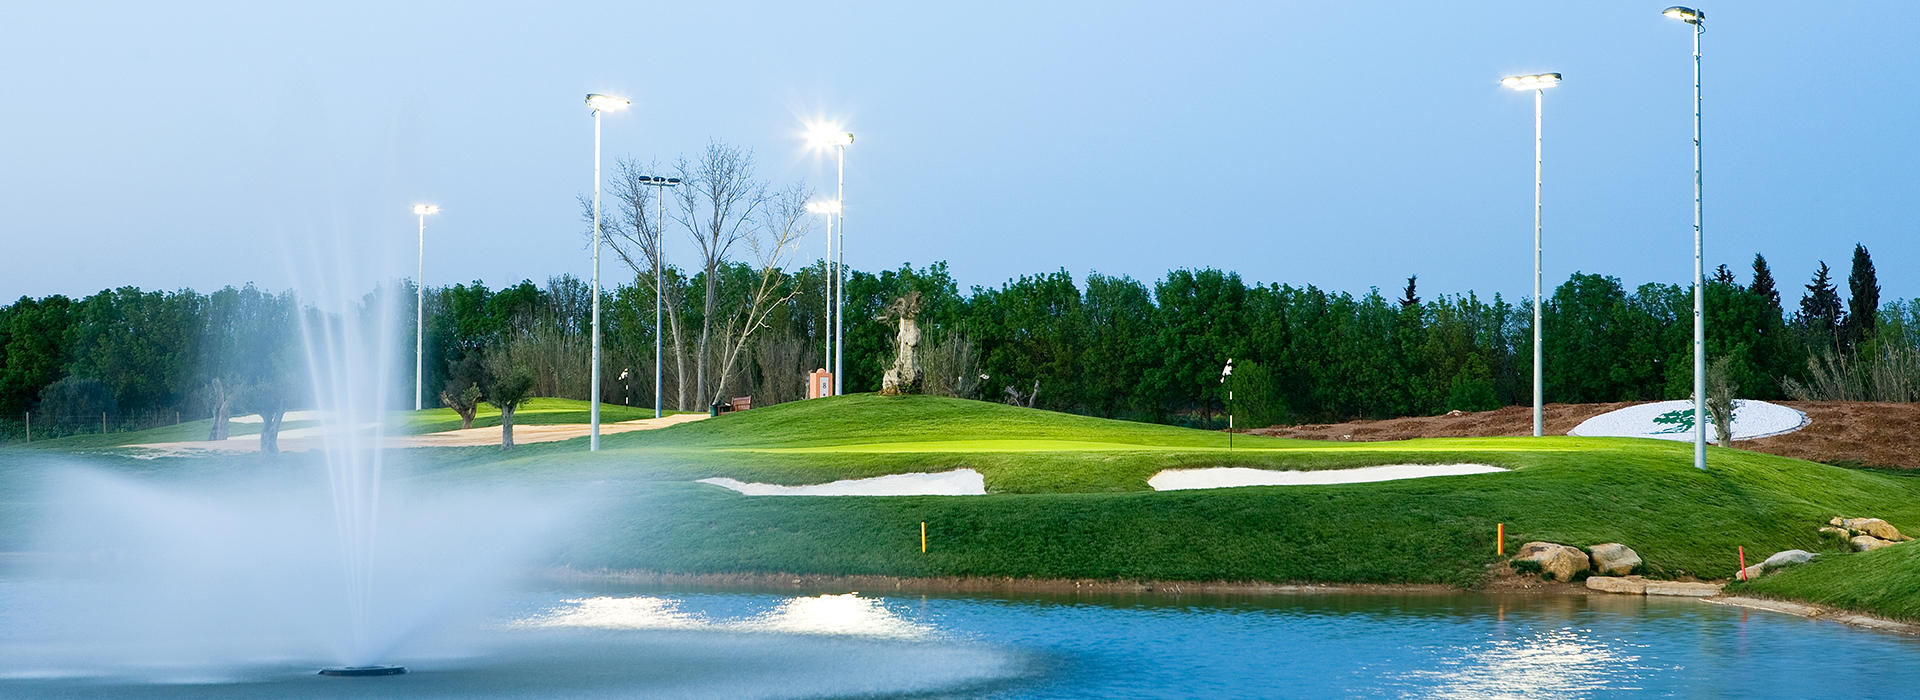 Golf Academy by night